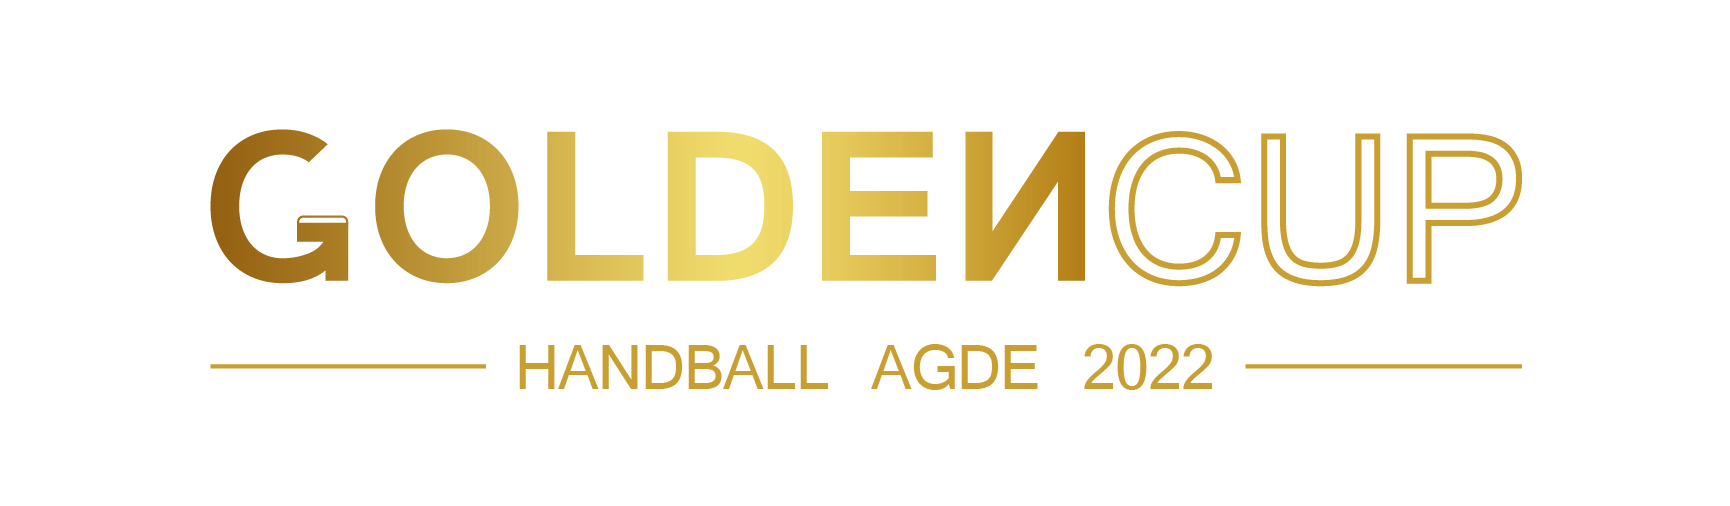 Logo Golden Cup Handball Agde 2022, tournoi international de handball qui aura lieu en avril 2022